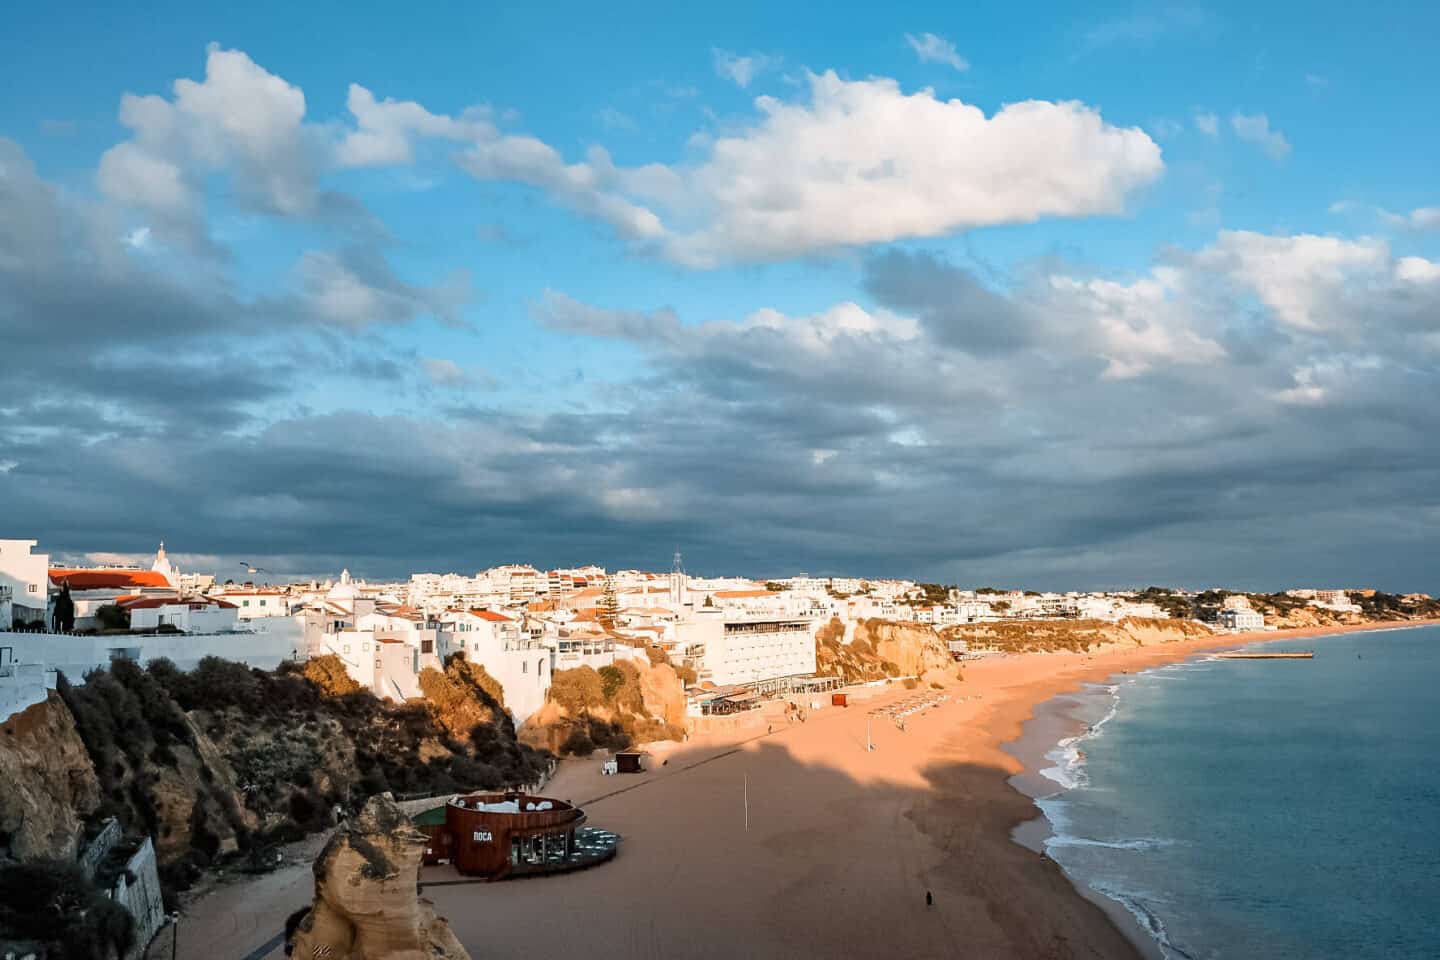 How Far is Albufeira From Faro? View of the coastline in Albuferia, Portugal.